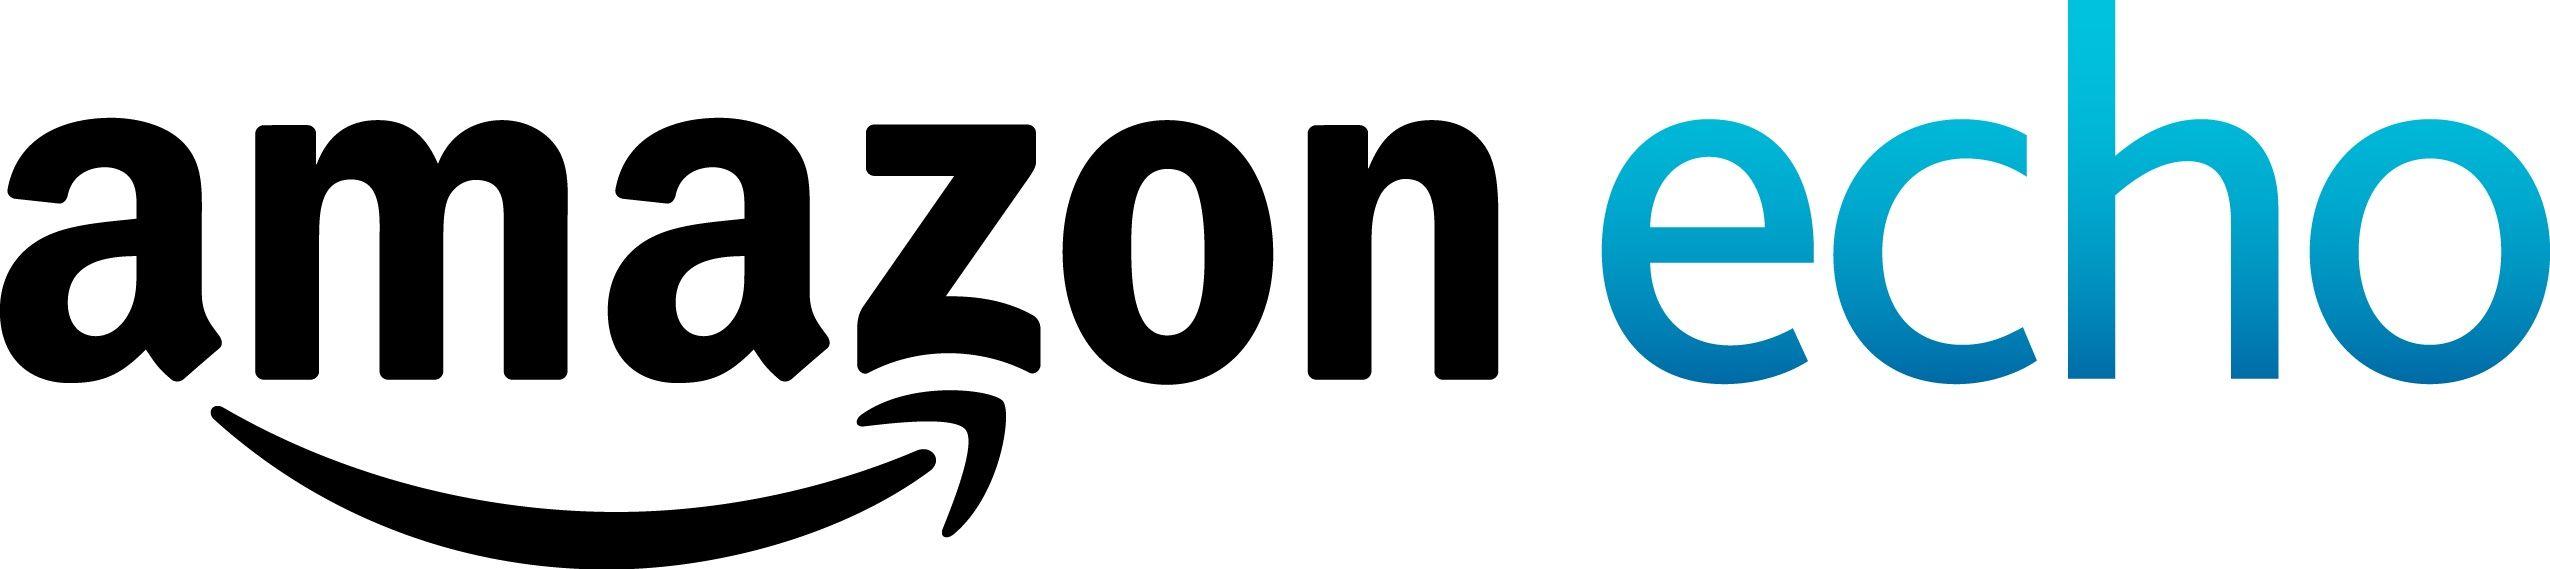 Amazon Corporate Logo - Images